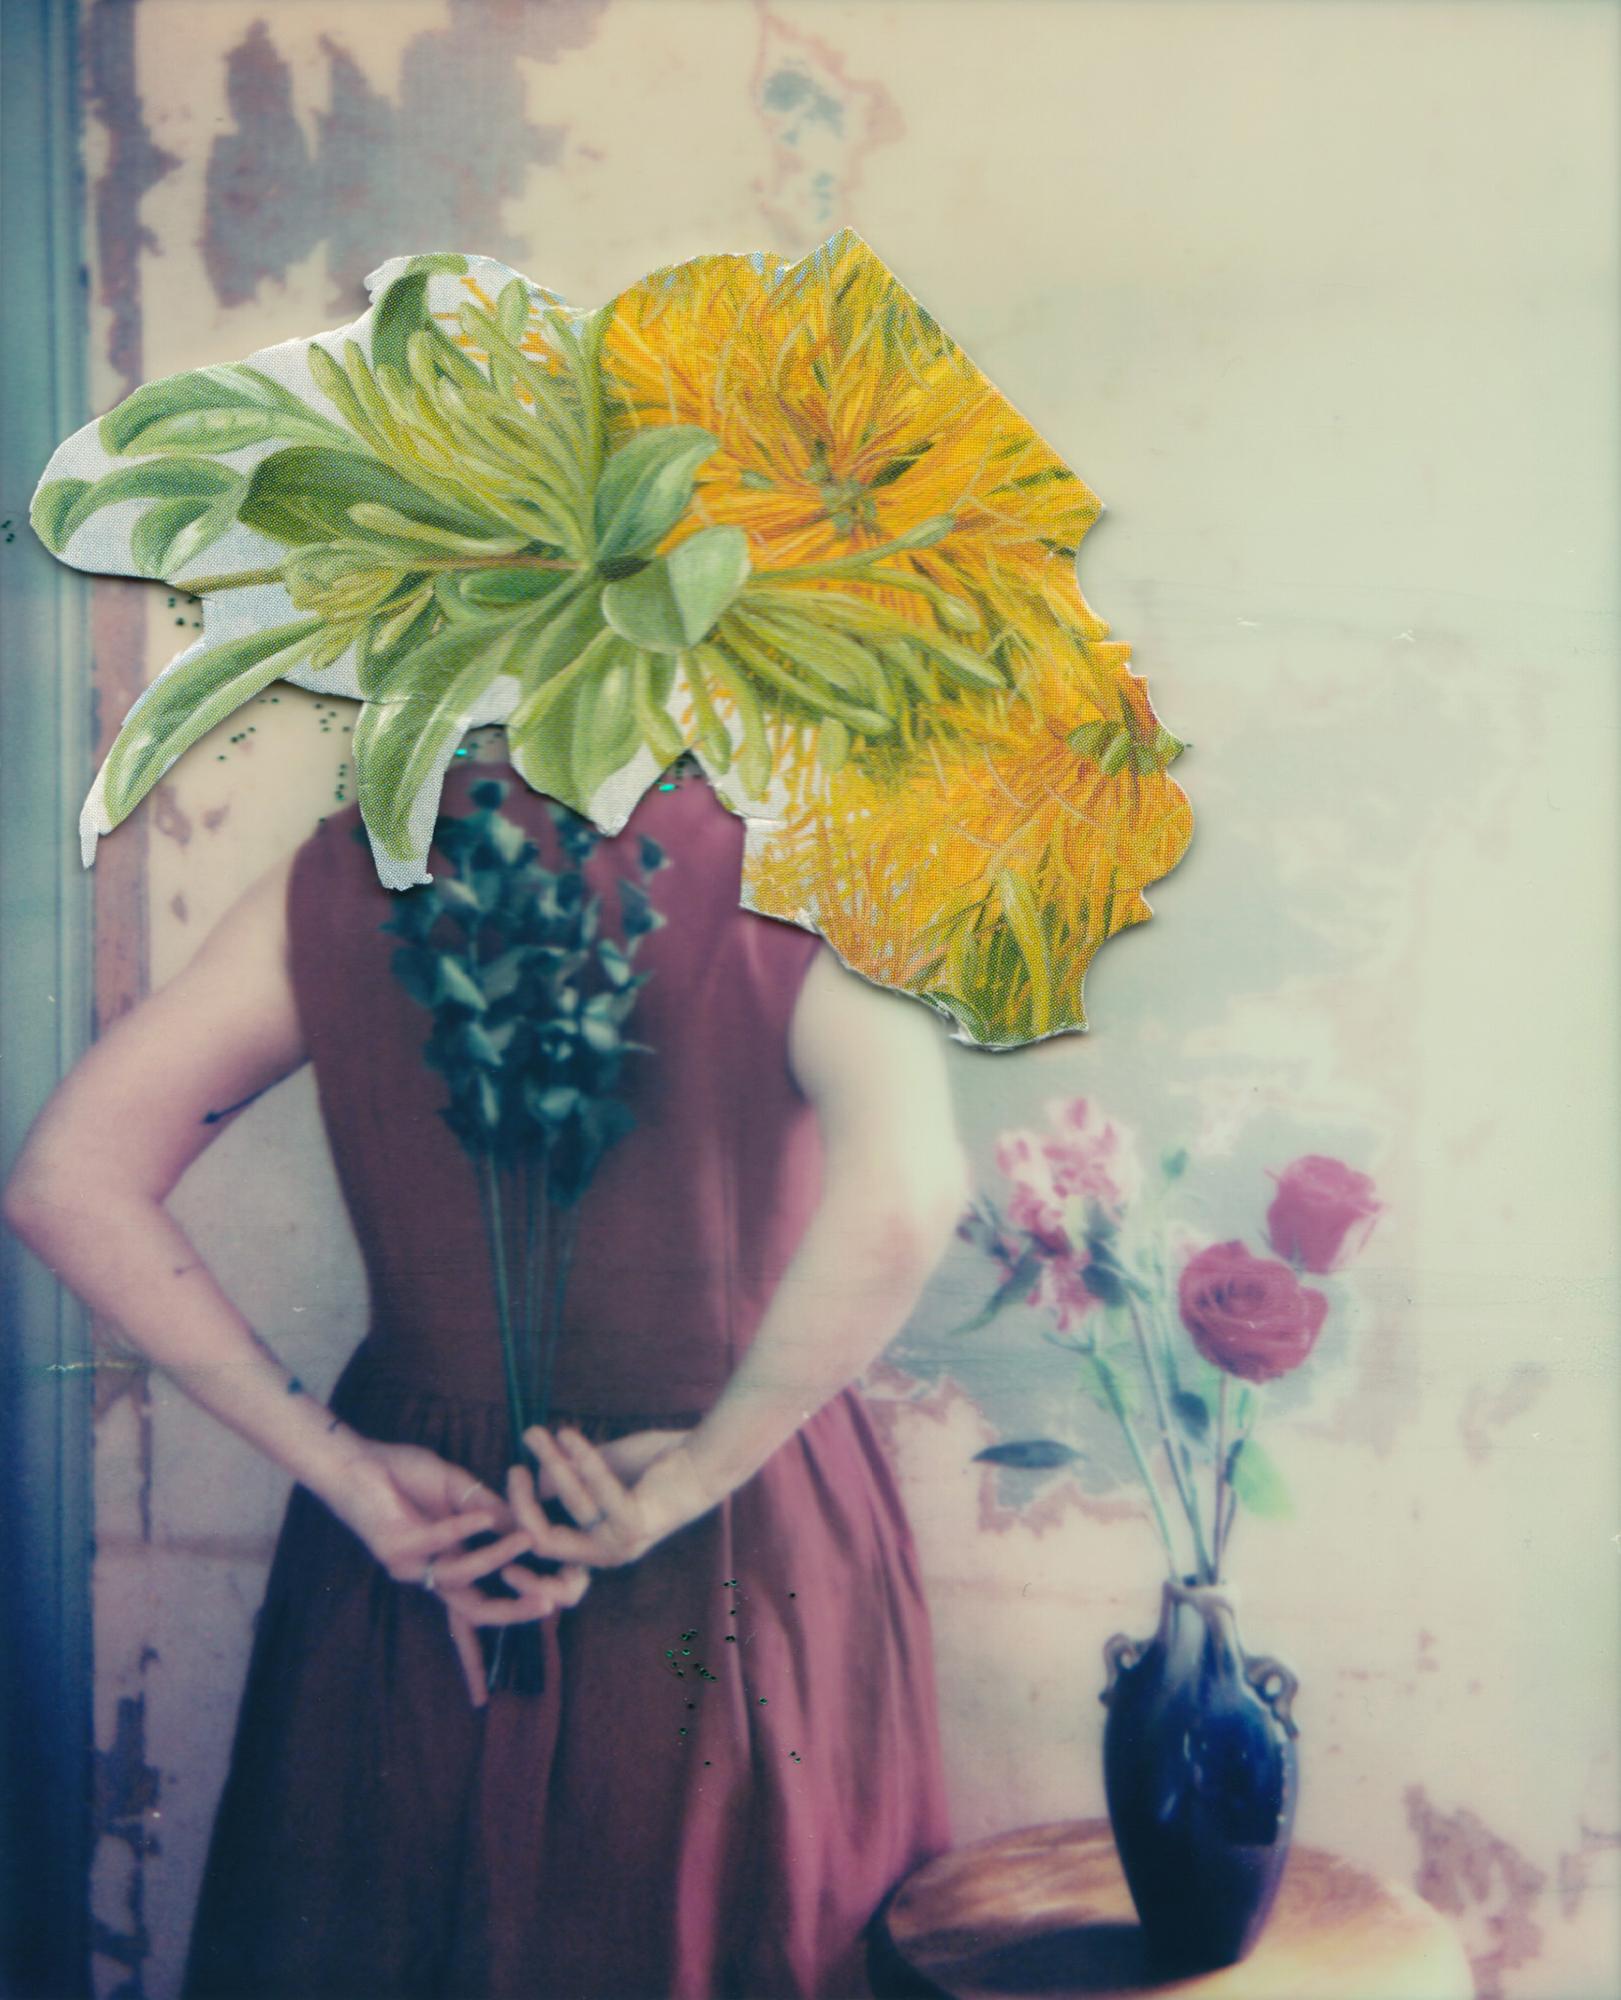 Figurative Photograph Lisa Toboz - In Bloom - Contemporain, Femme, Polaroid, Peinture